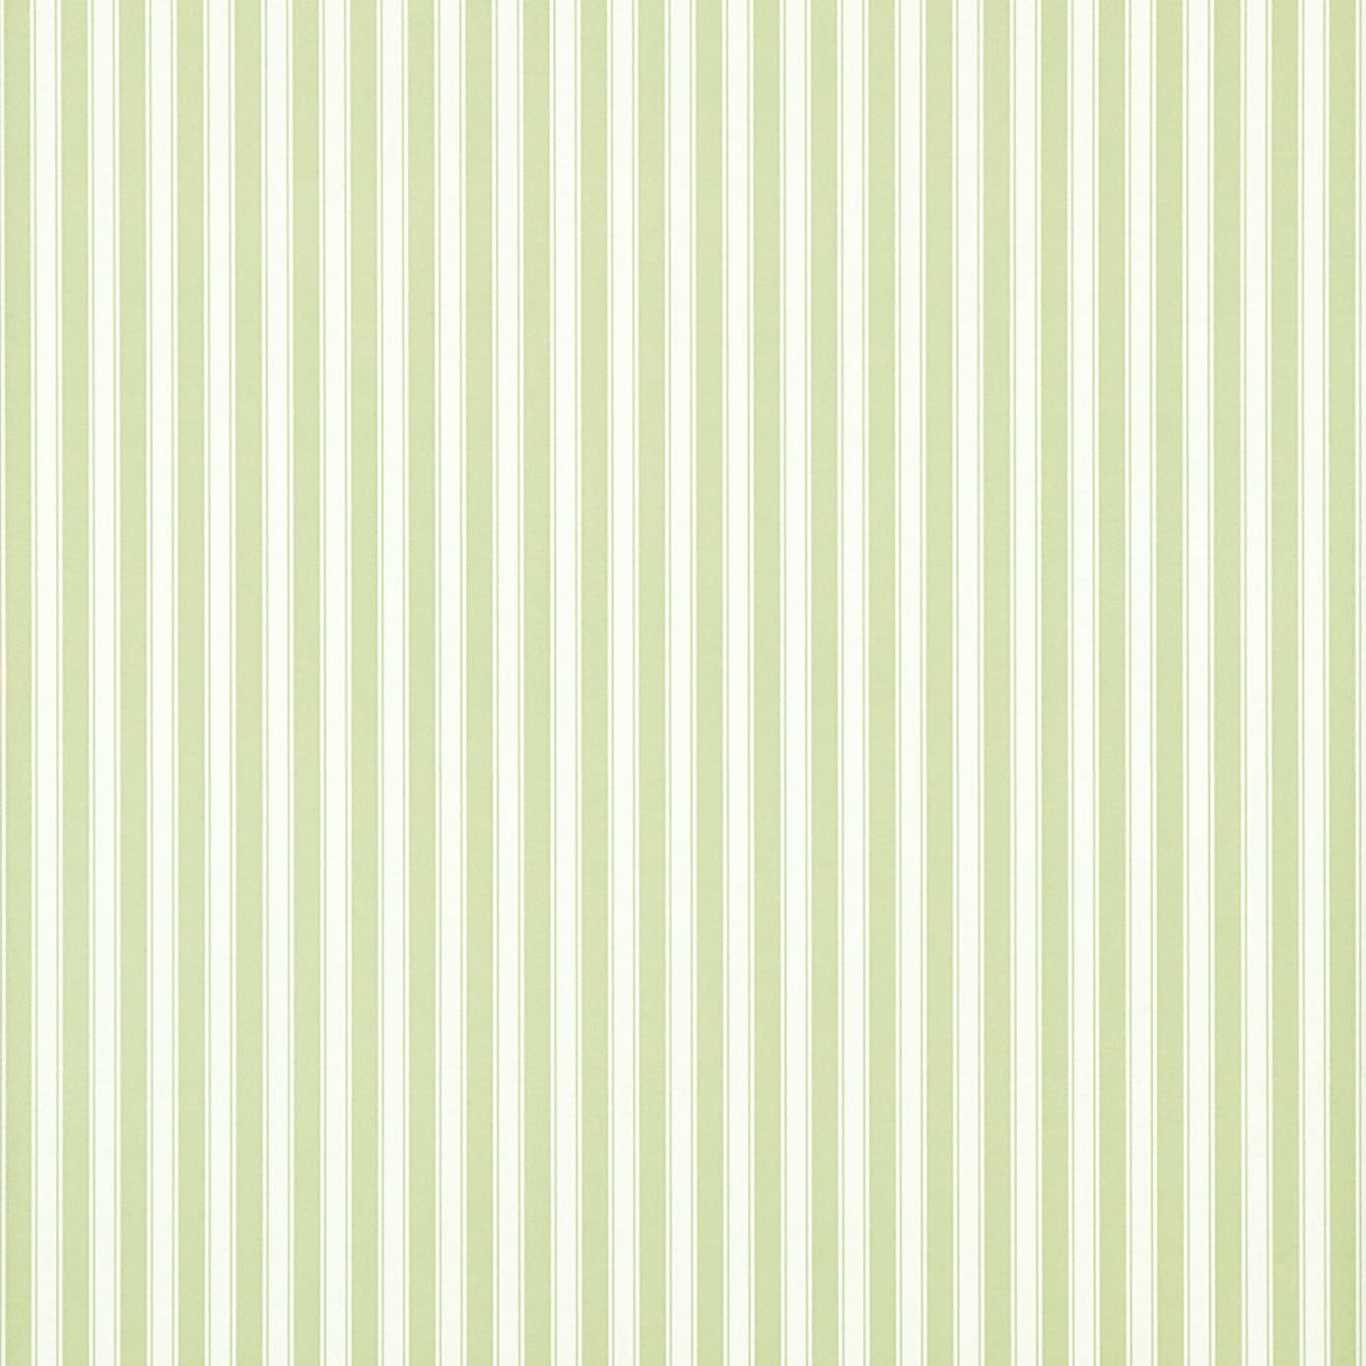 New Tiger Stripe Leaf Green/Ivory Wallpaper by SAN